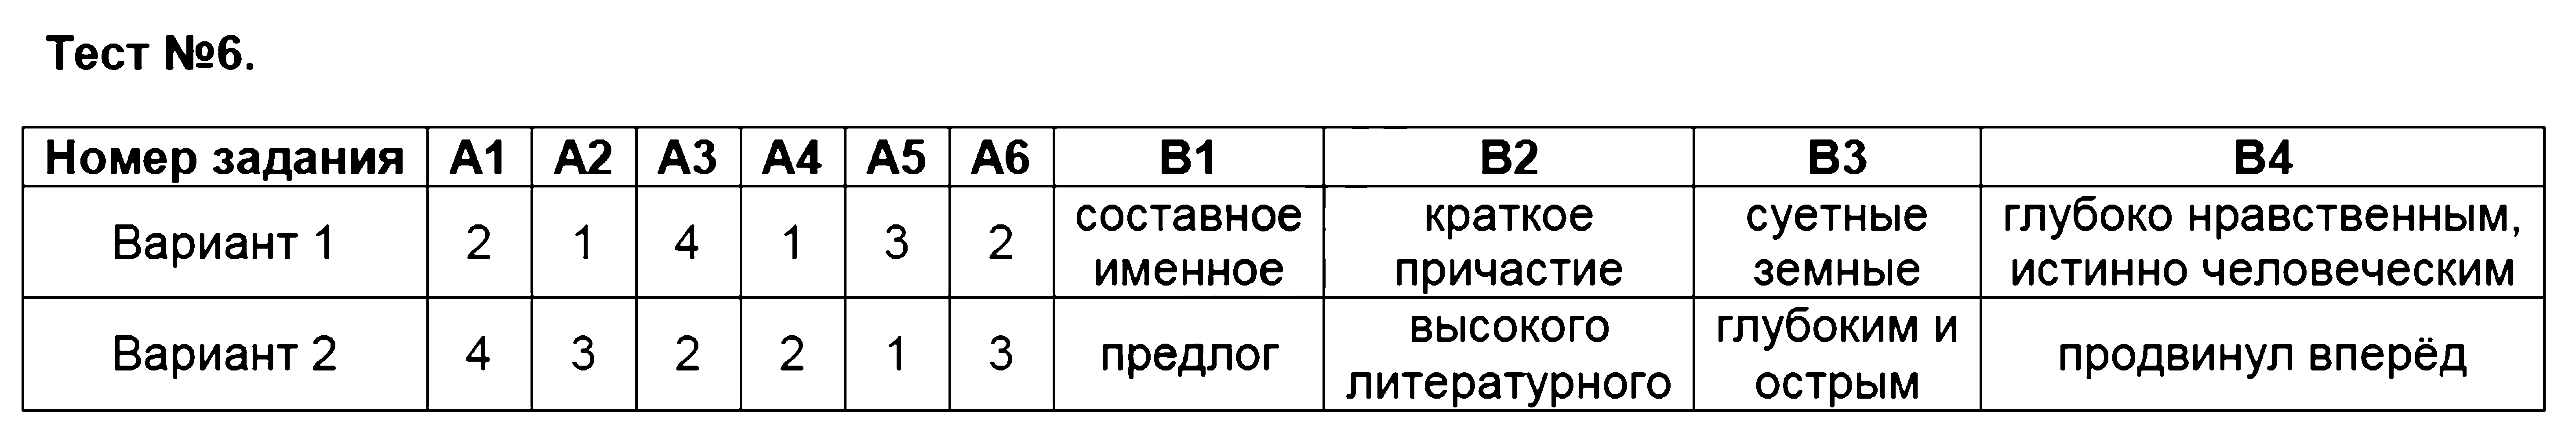 ГДЗ Русский язык 9 класс - Тест 6